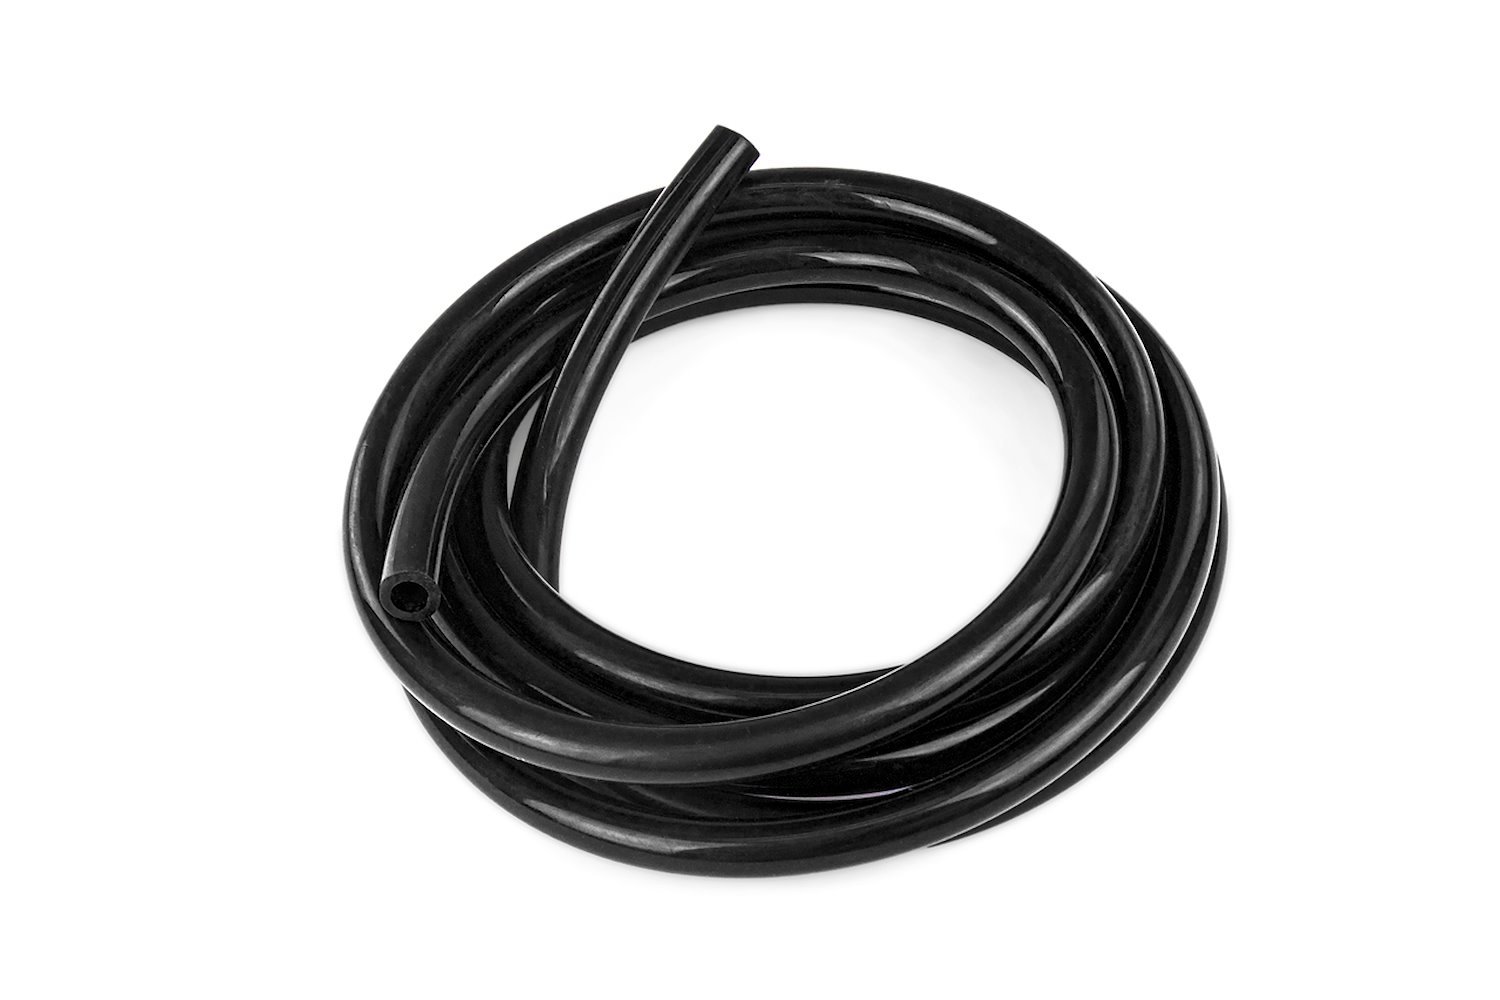 HTSVH6-BLKx5 High-Temperature Silicone Vacuum Hose Tubing, 1/4 in. ID, 5 ft. Roll, Black